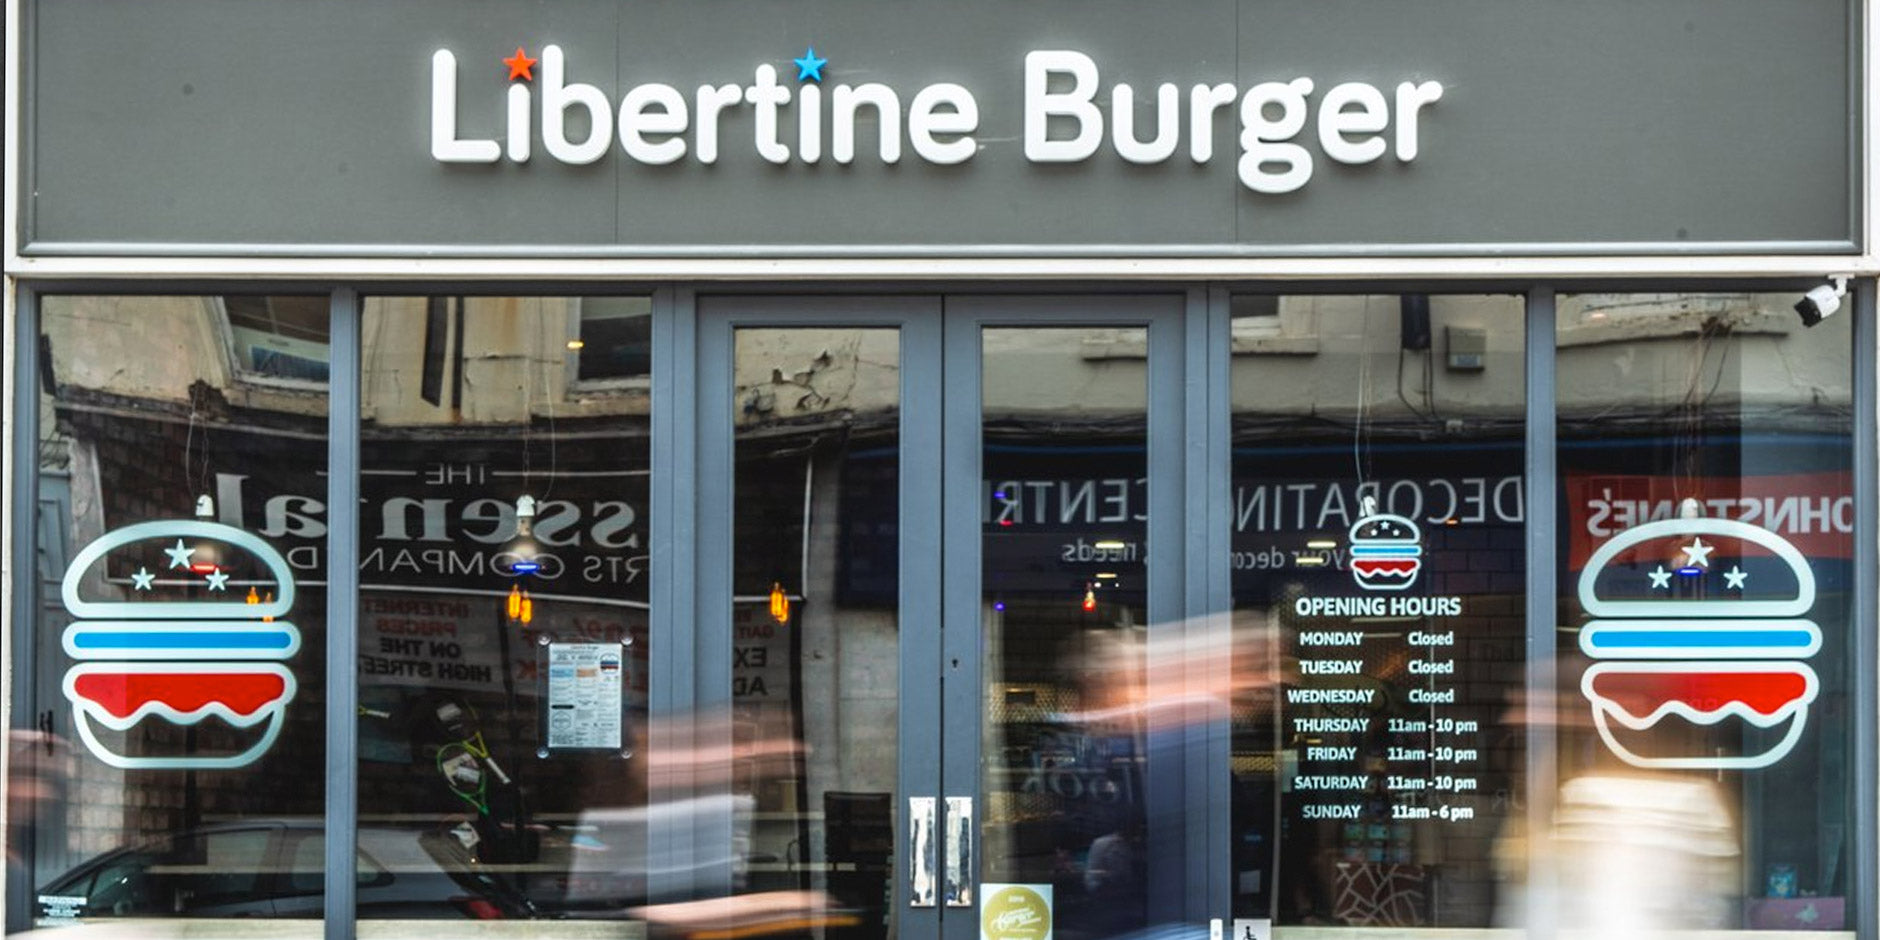 Libertine Burger Restaurant Signage